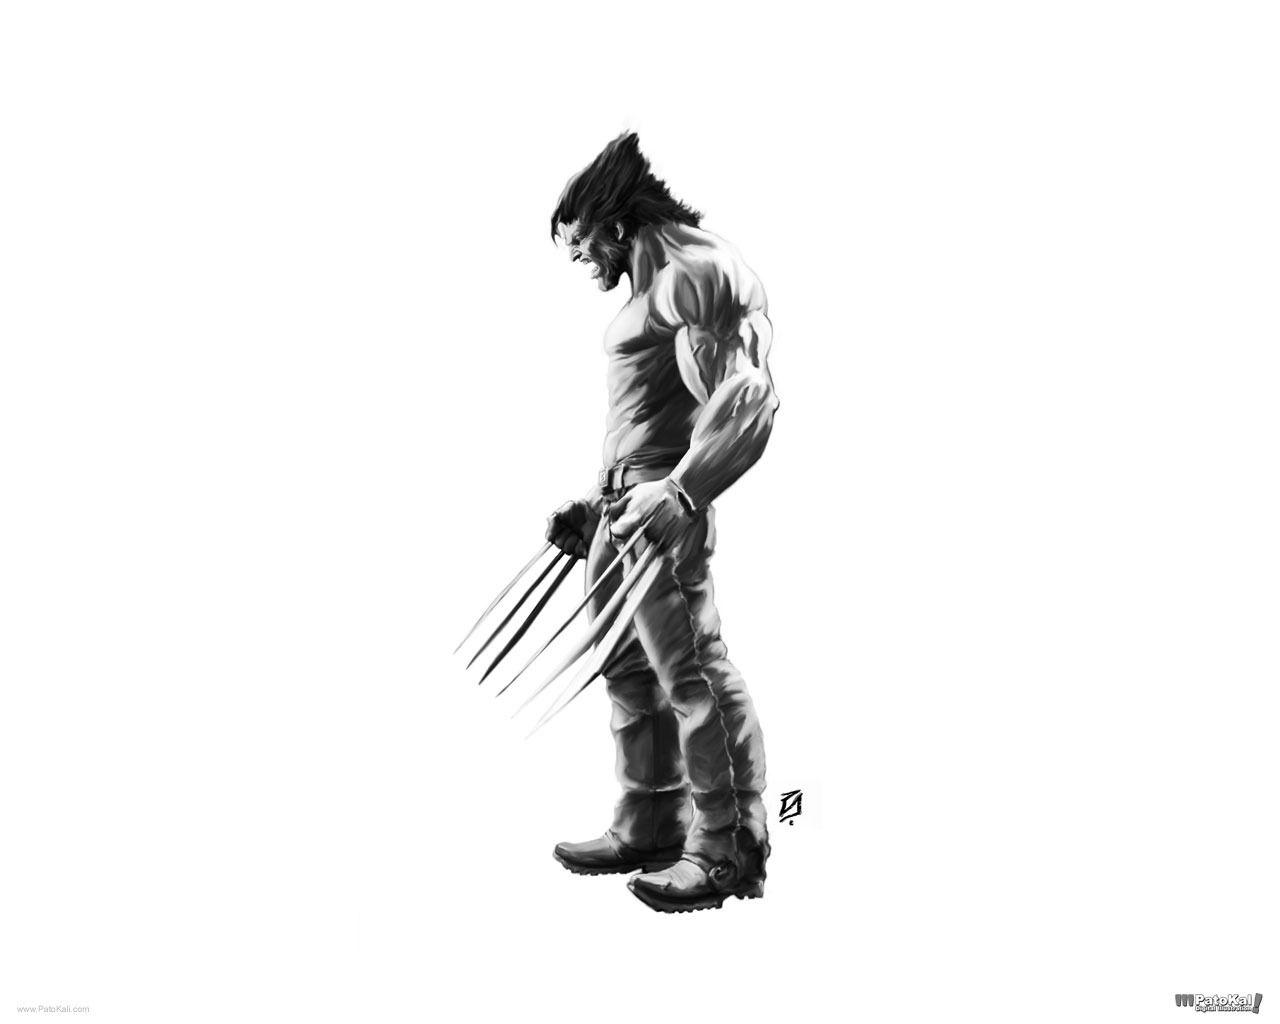 Wolverine Wallpaper.com